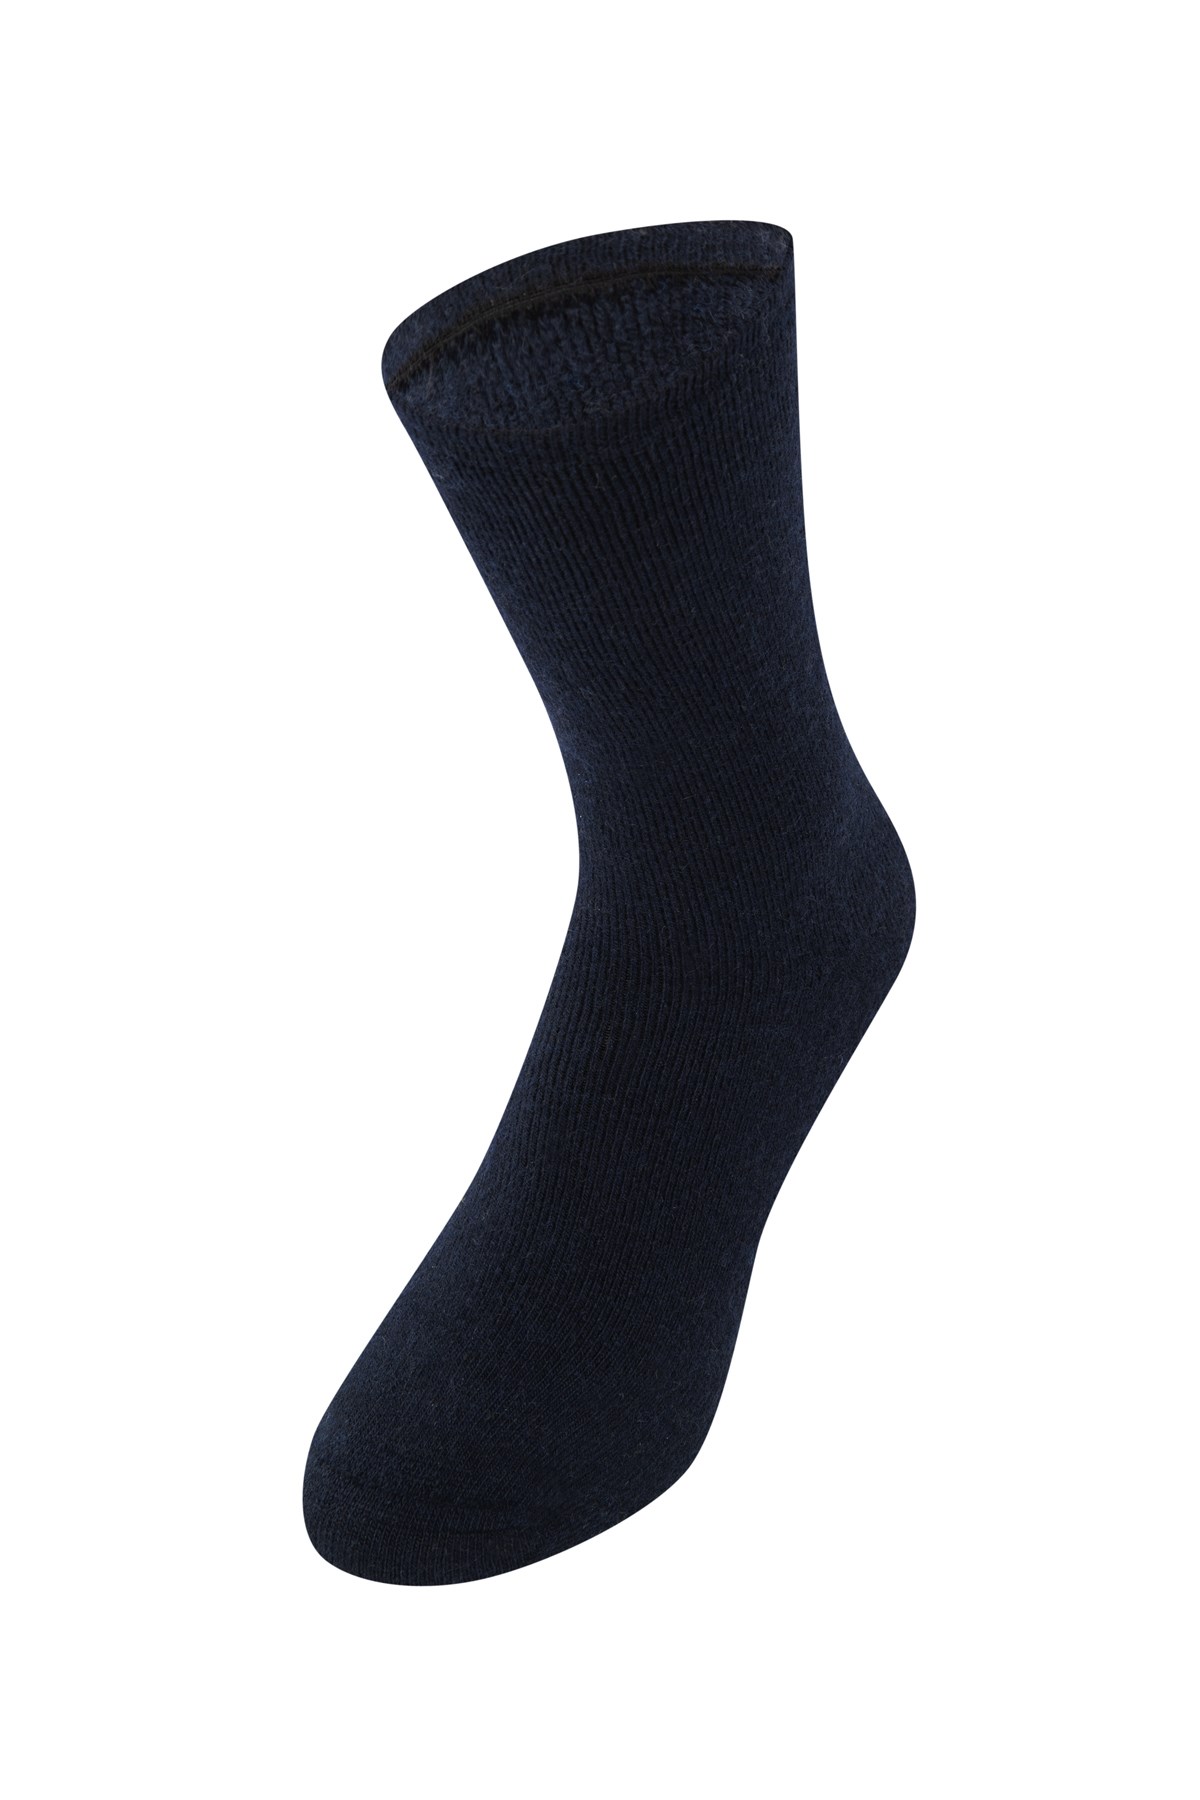 Erdem Men's Thermal Winter Socks